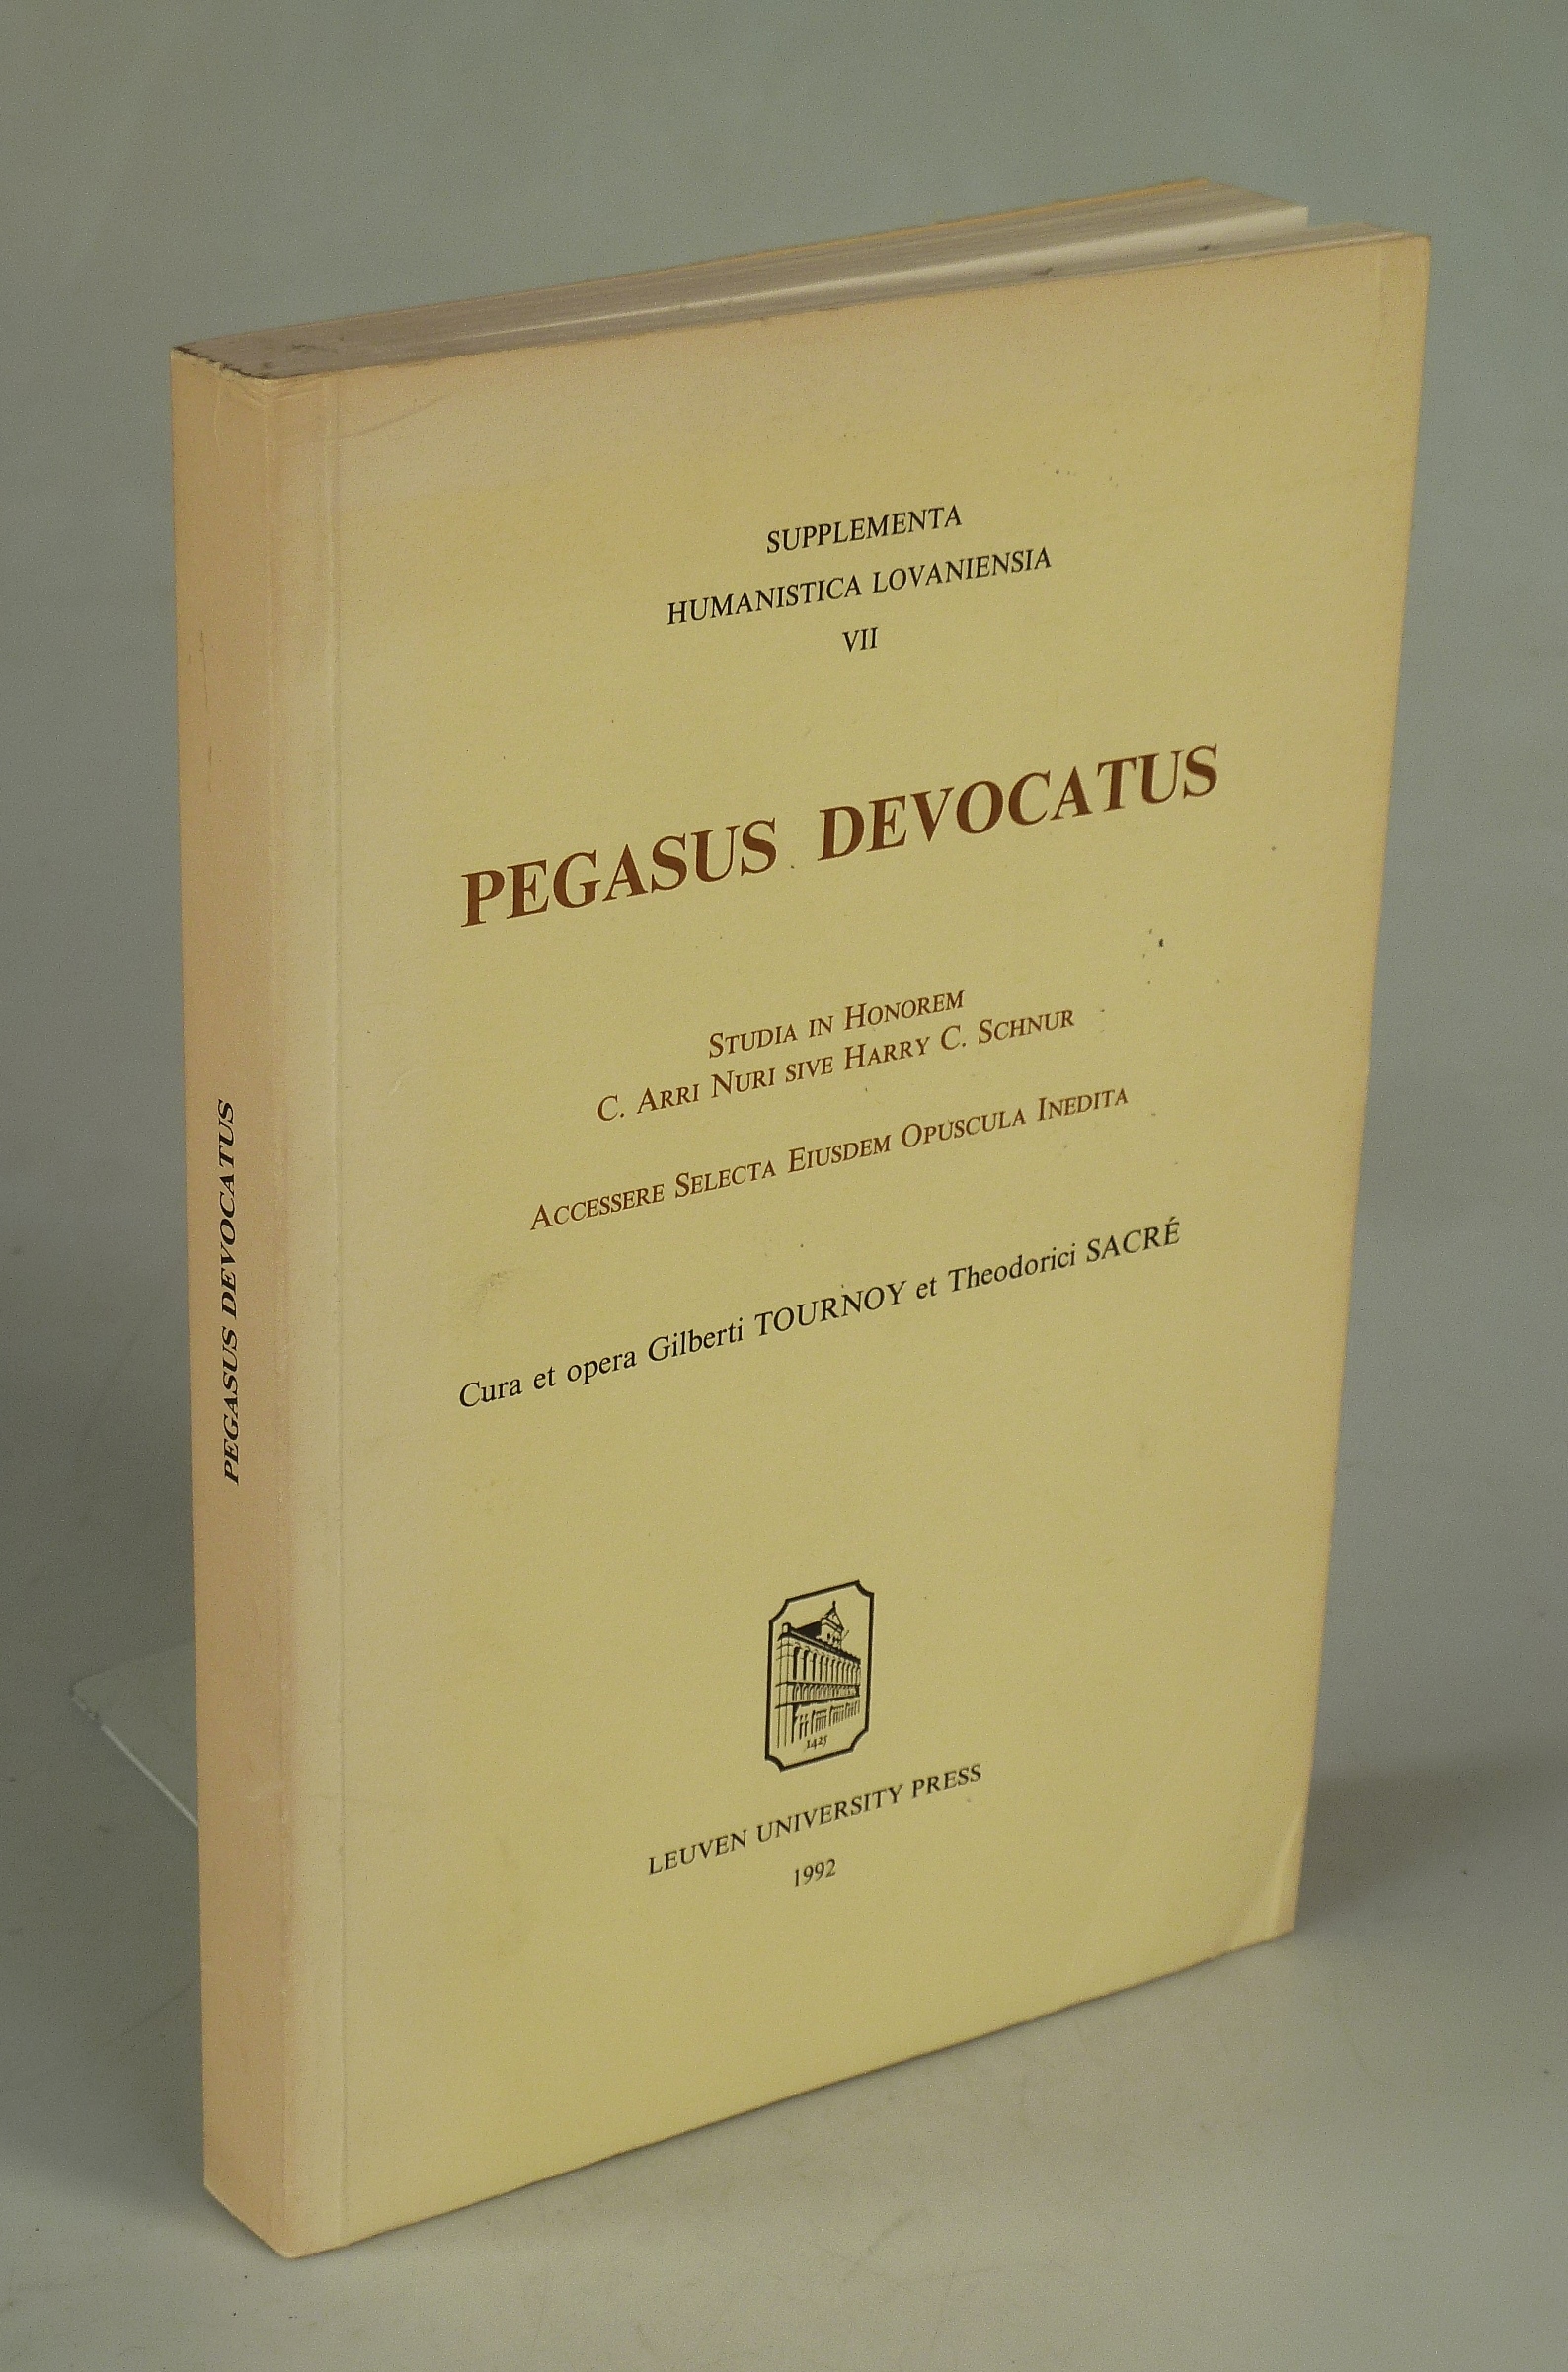 Pegasus devocatus. - TOURNOY, GILBERTI U. THEODORICI SACRÉ (EDIT.).